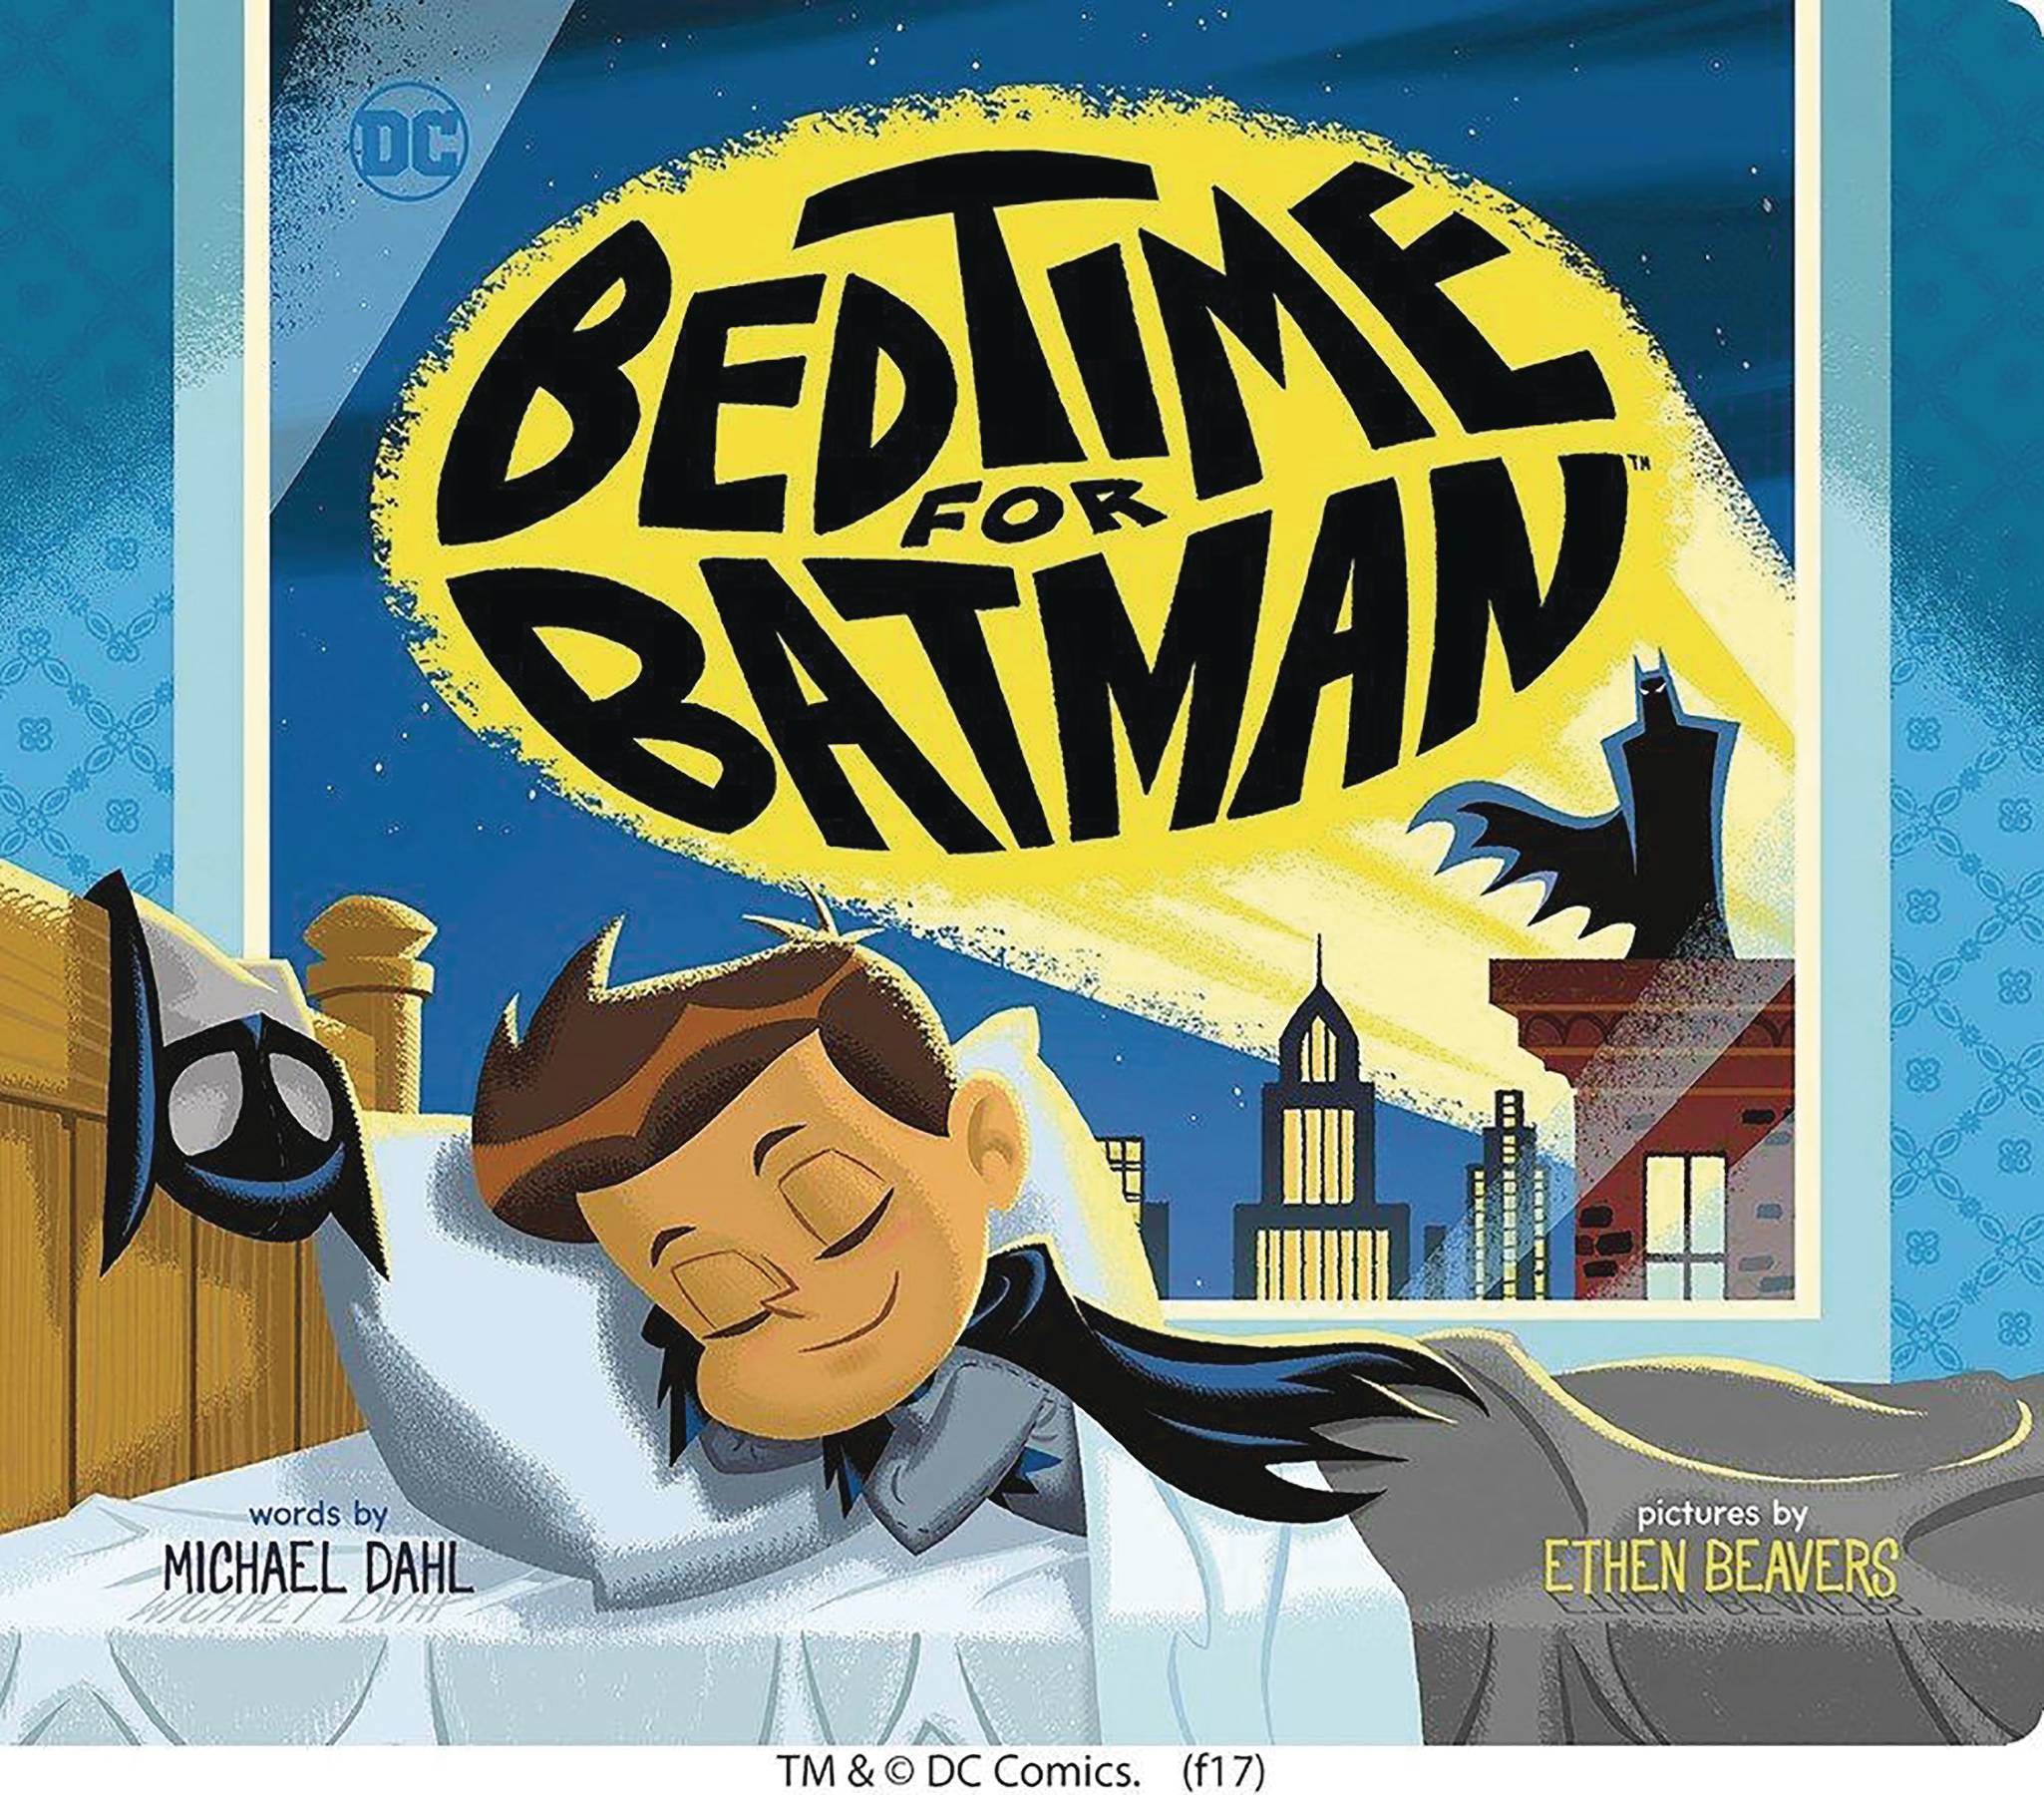 Bedtime For Batman Young Reader Board Book